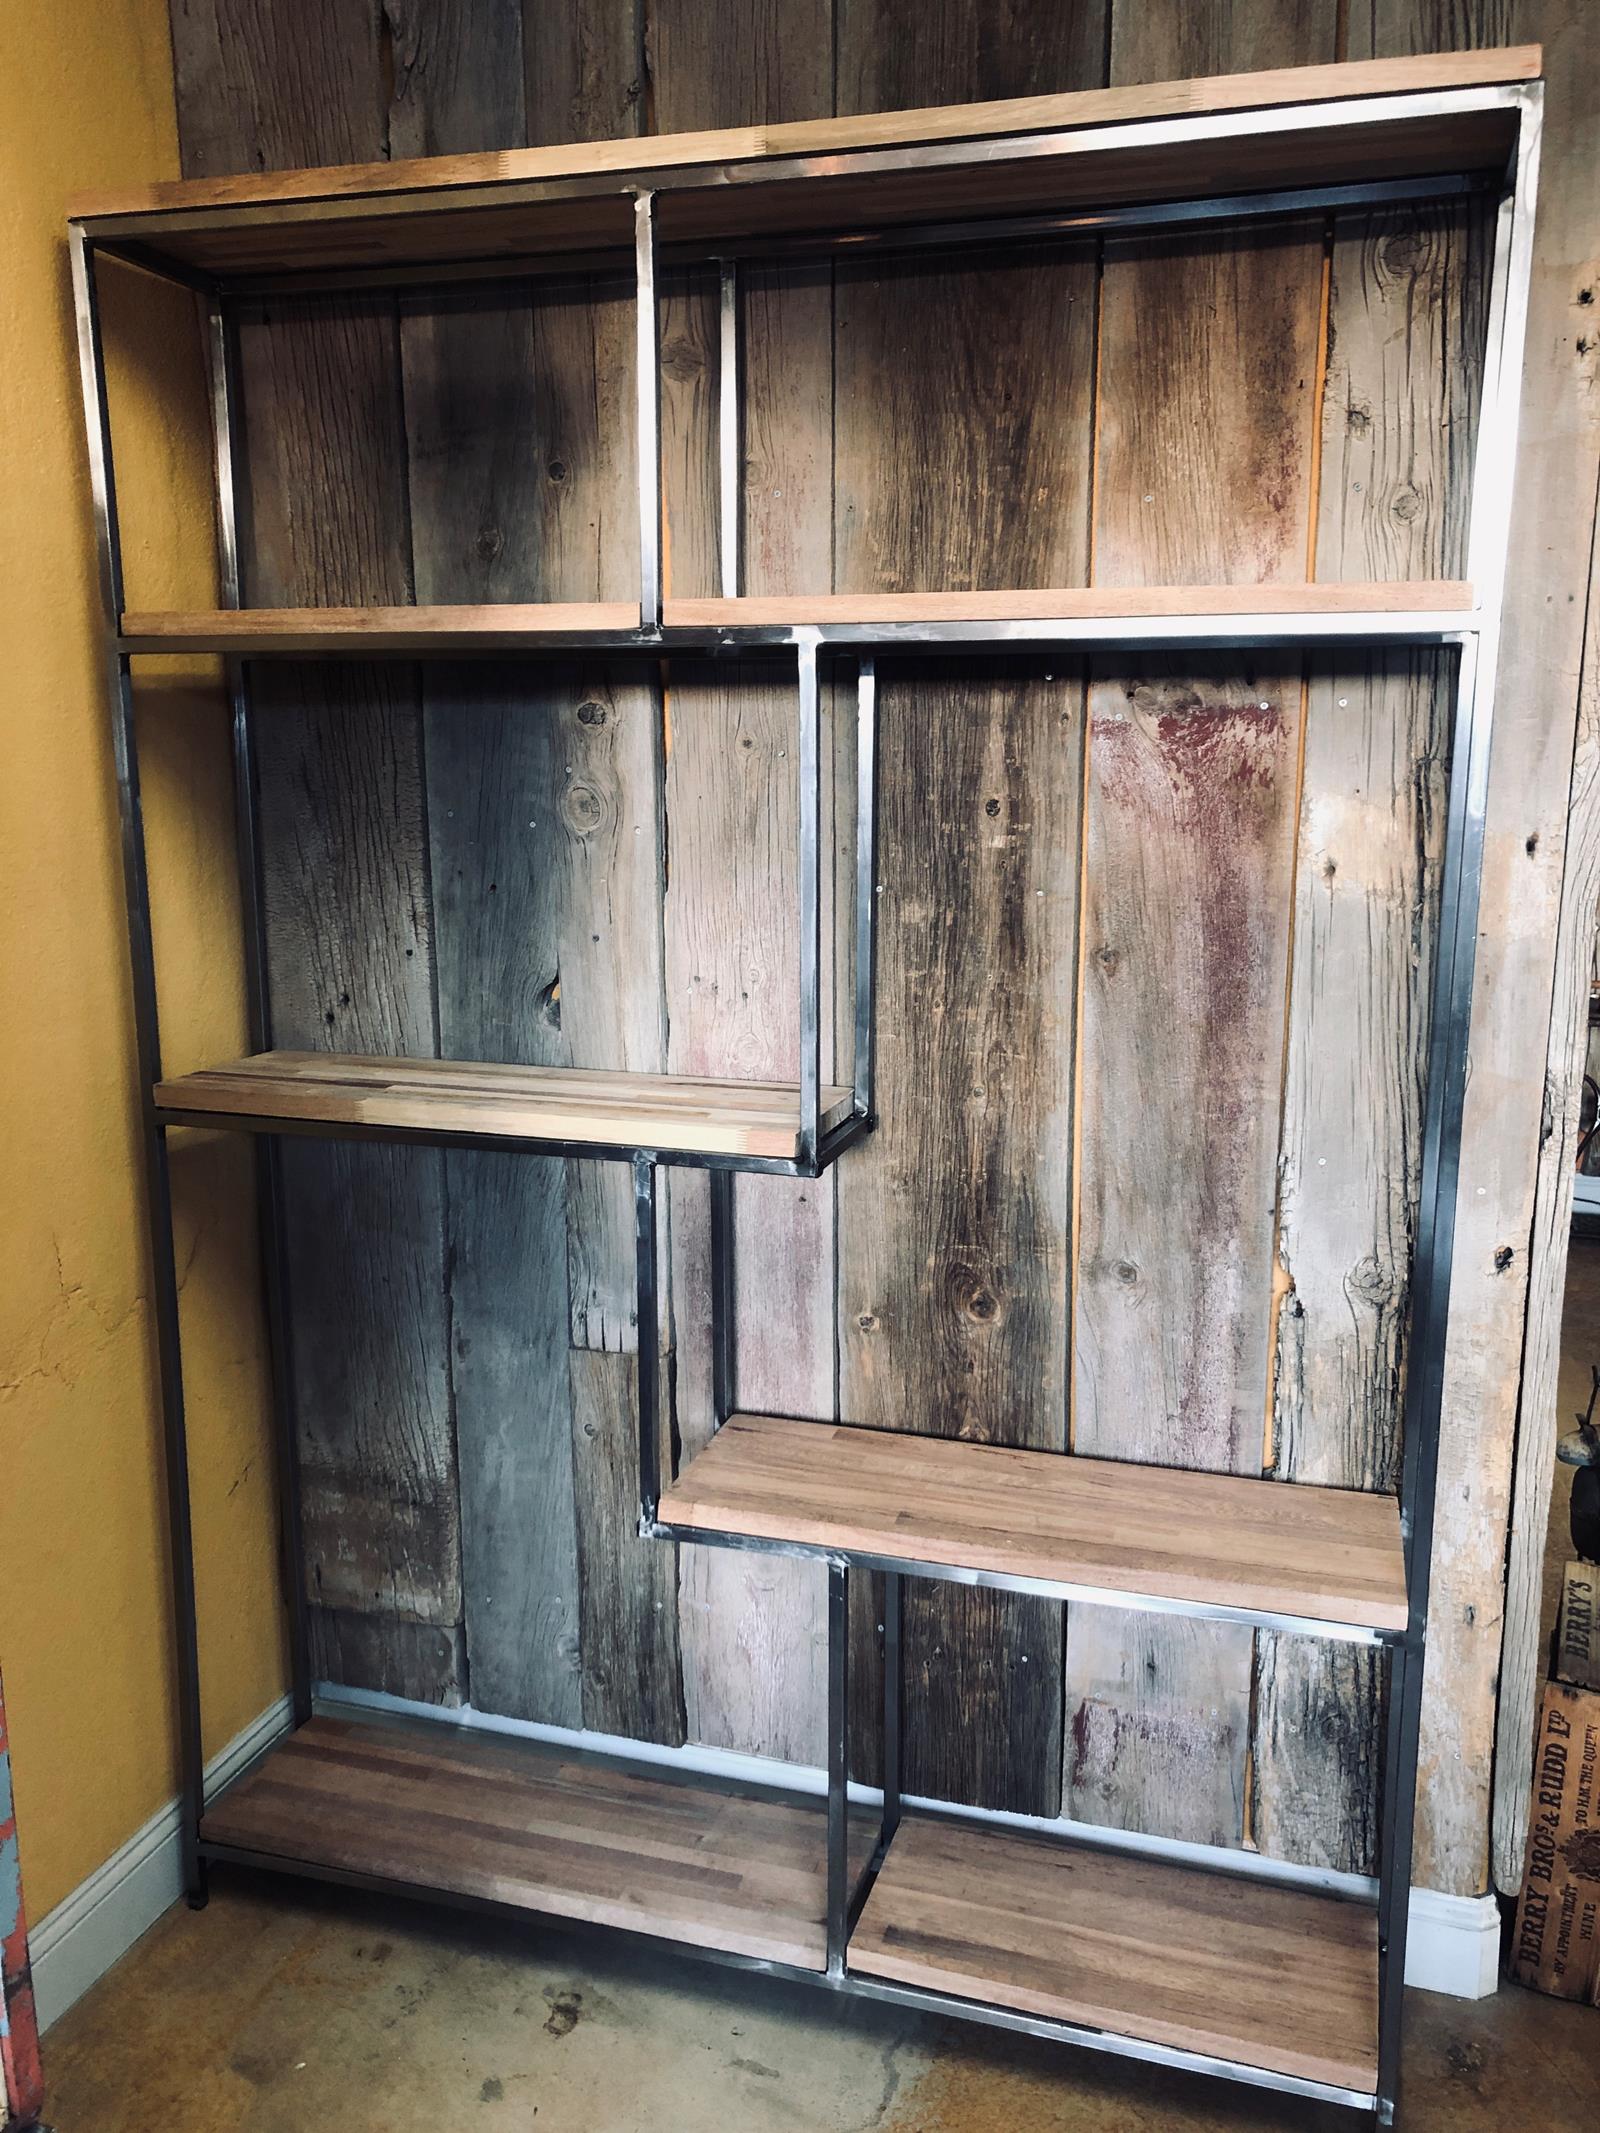 8ft x 5ft industrial shelf w tropical hardwood shelving . 1789.00